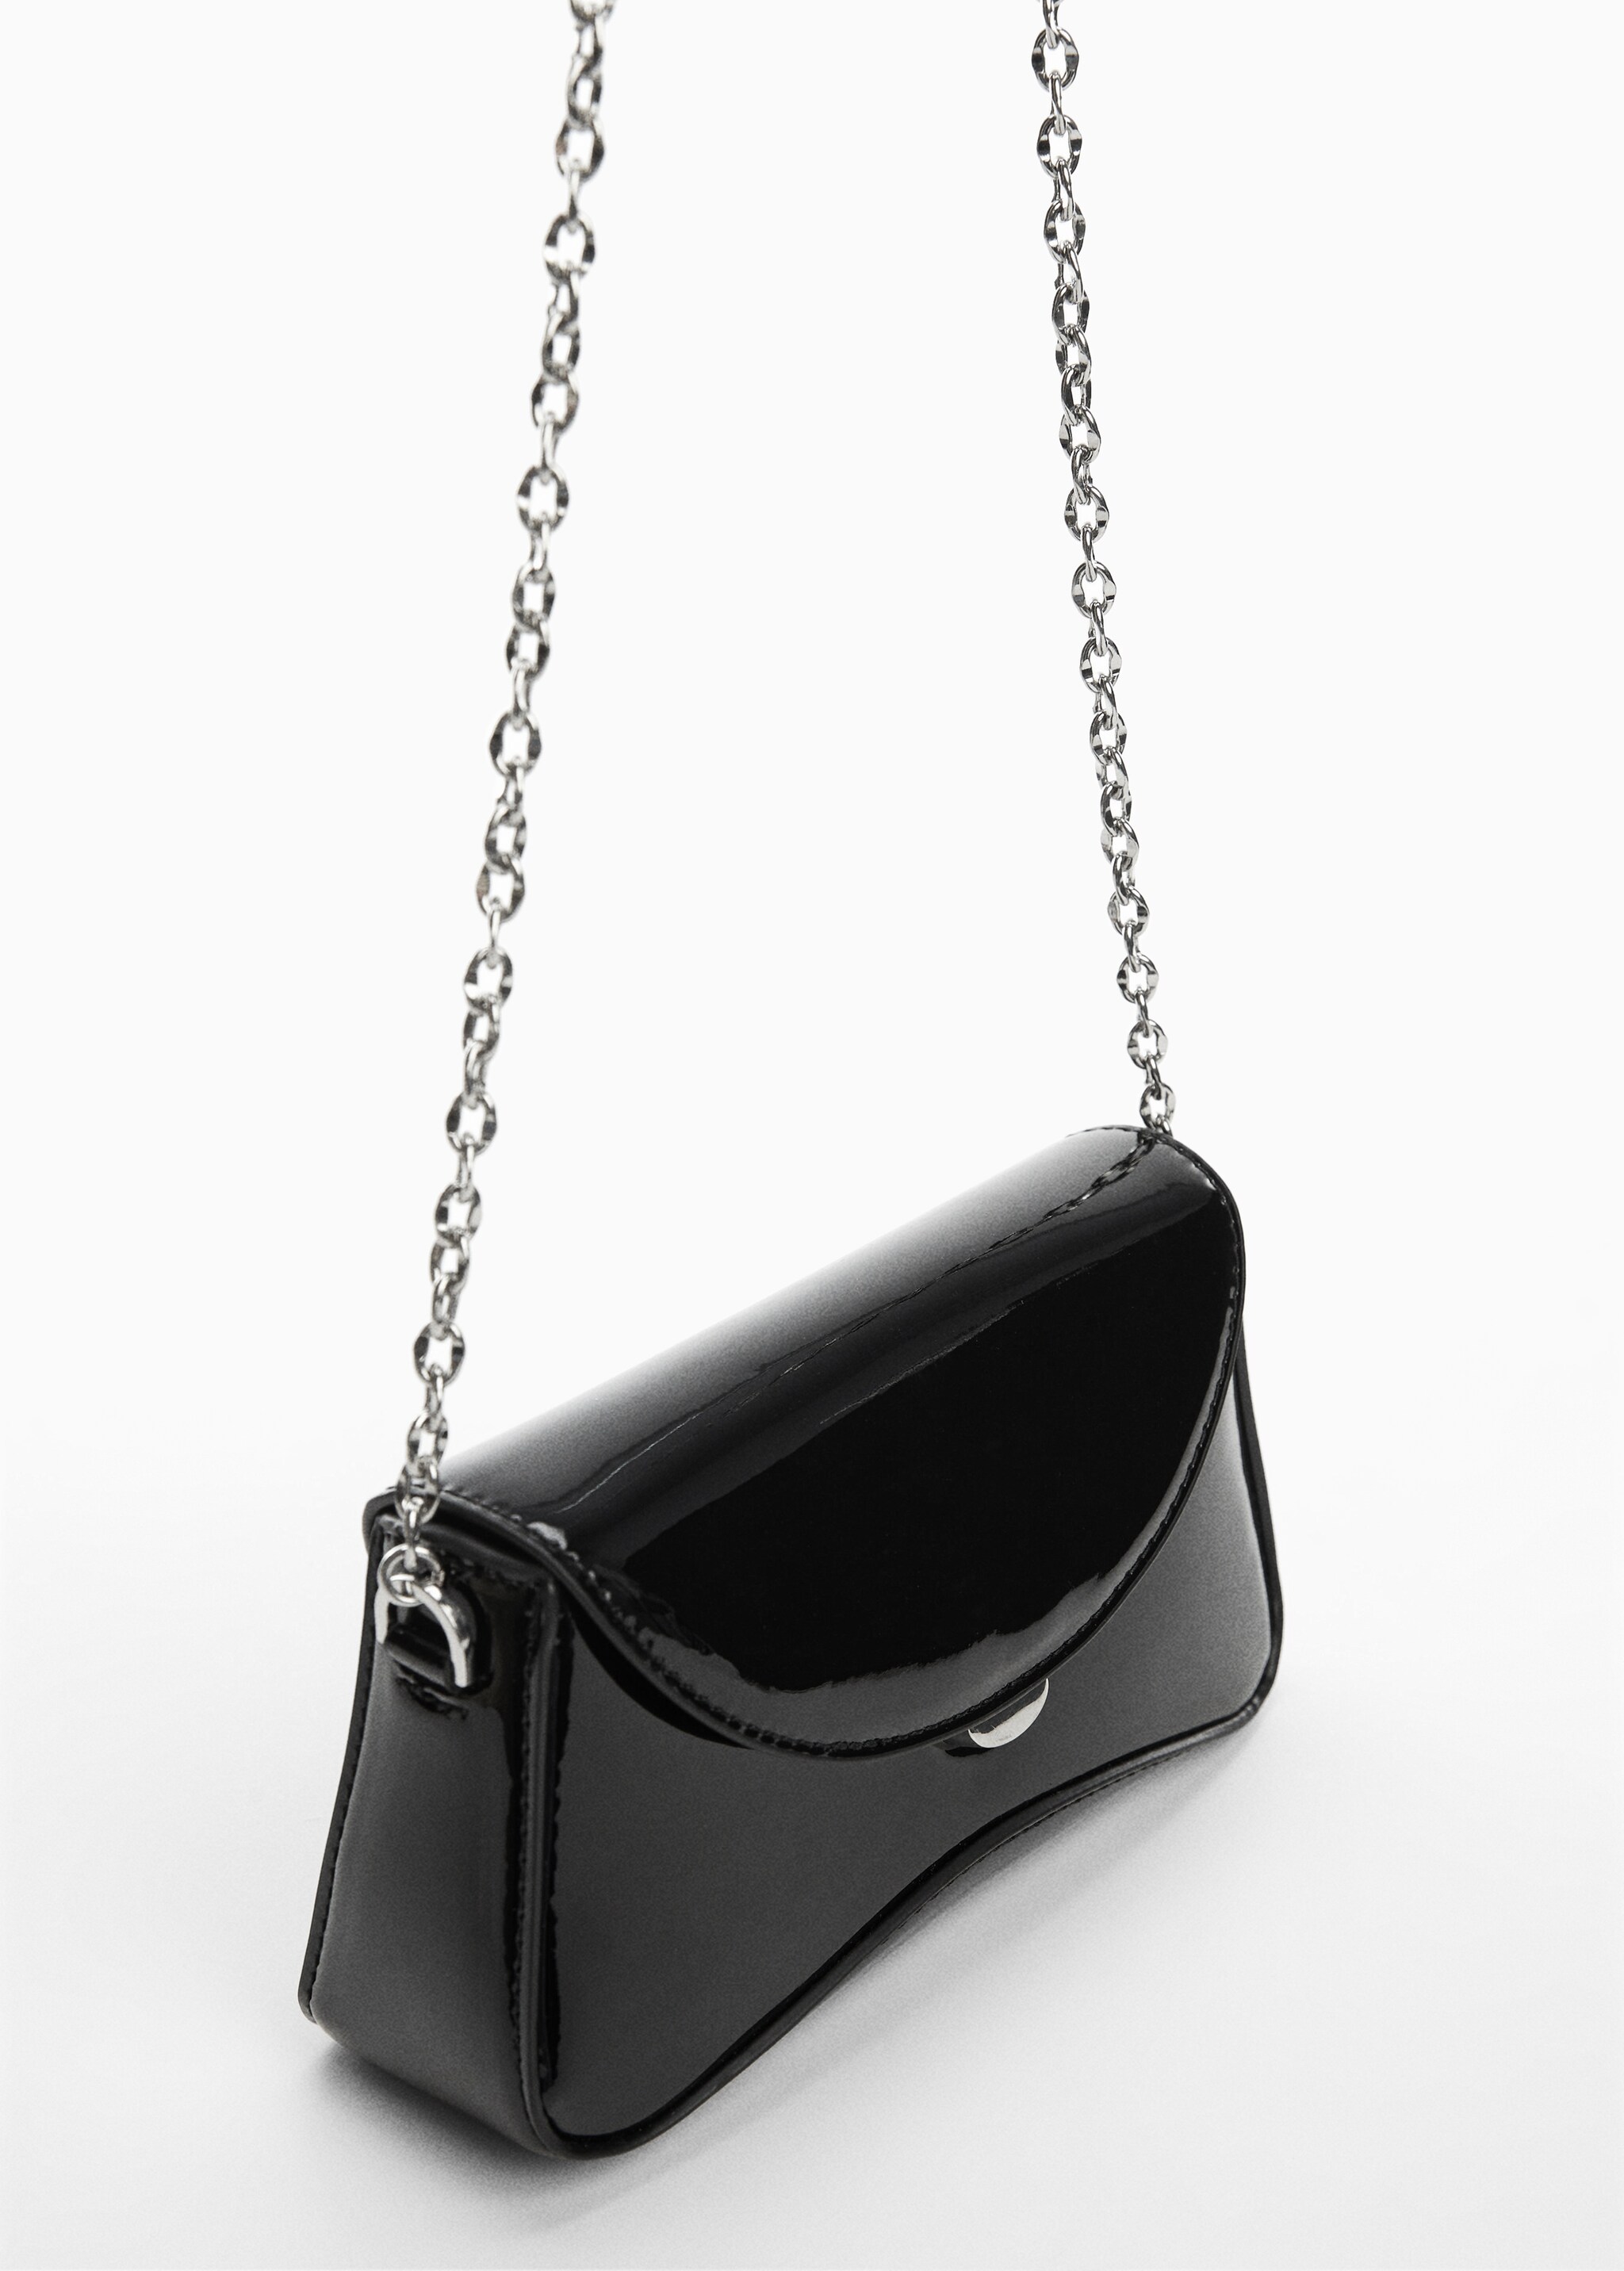 Patent leather chain handbag - Medium plane